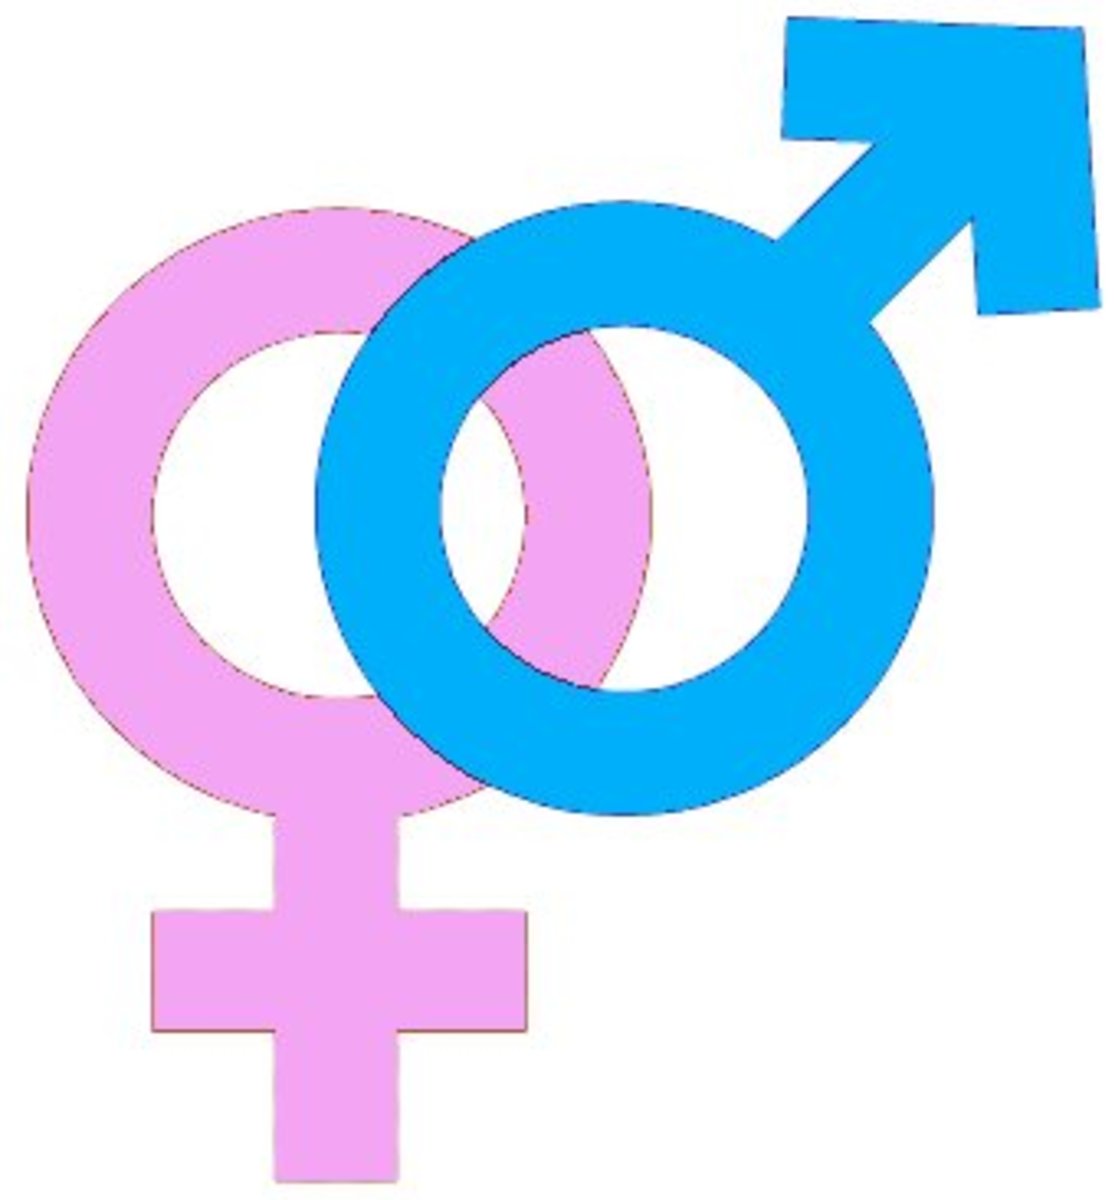 Género - masculino y femenino